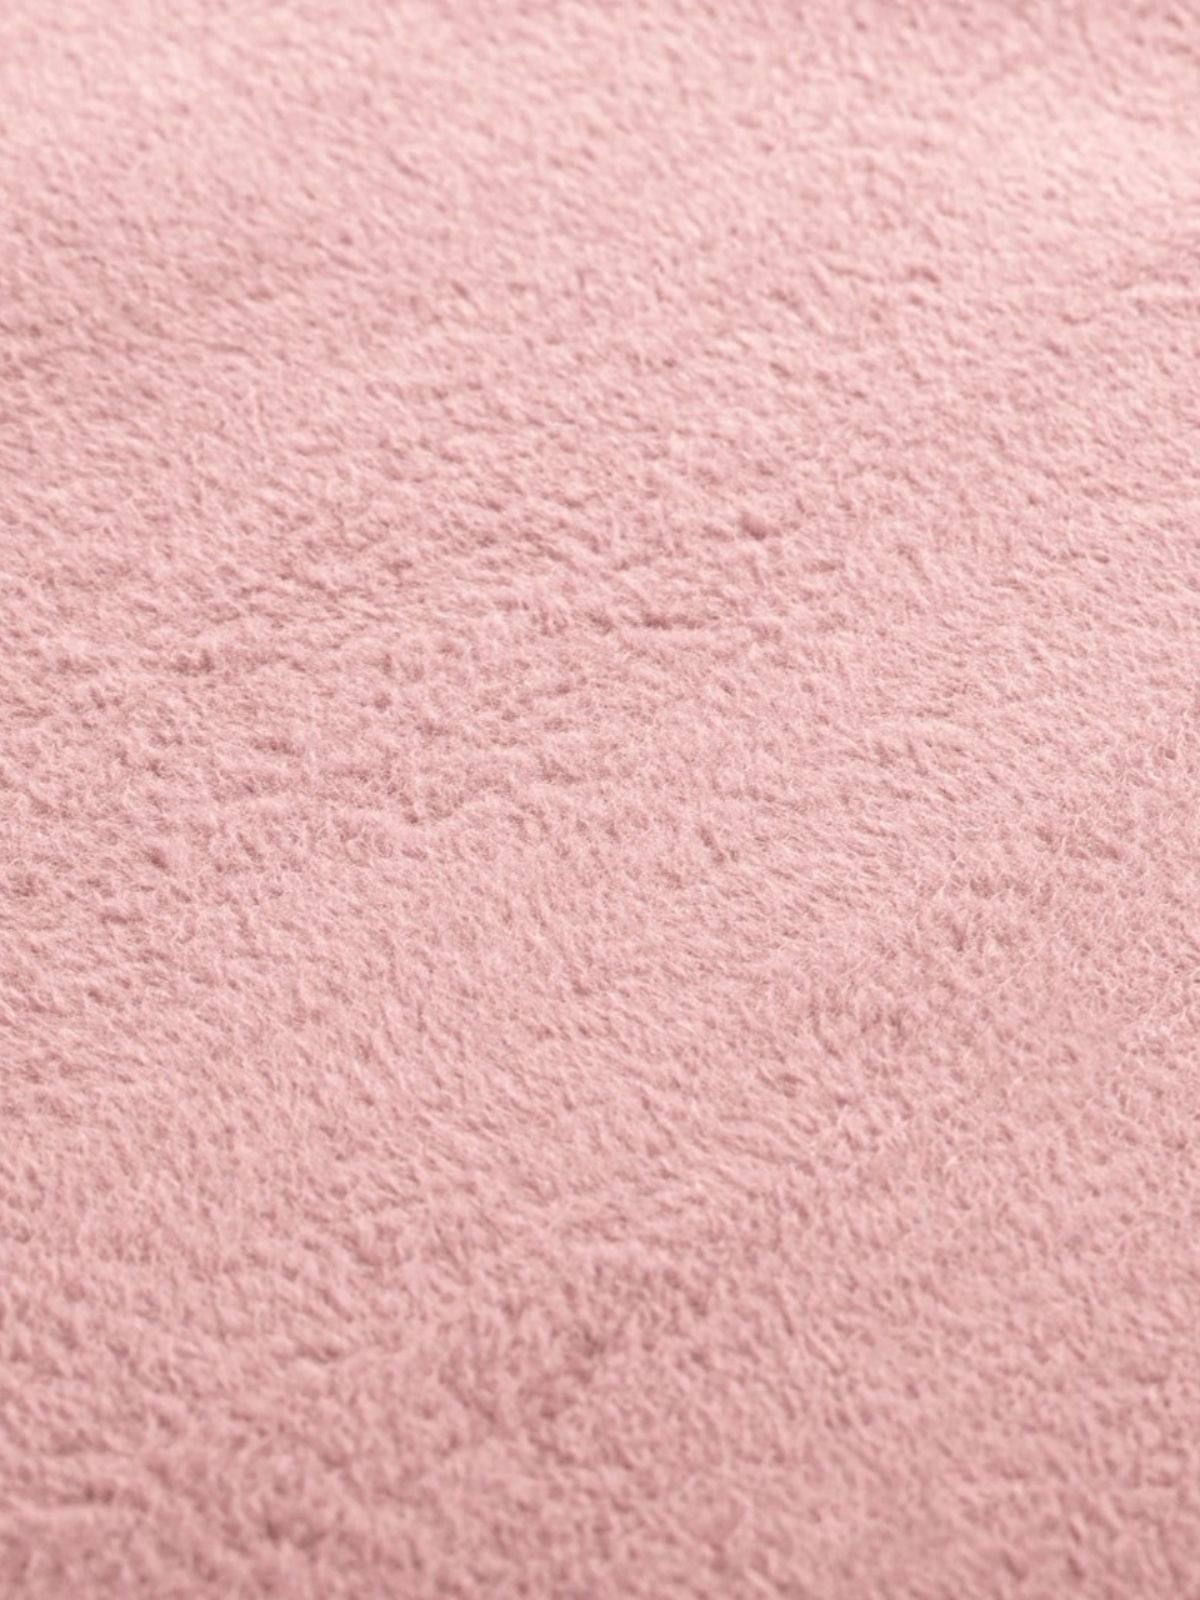 Coperta Franse in colore rosa double face 150x200 cm.-3